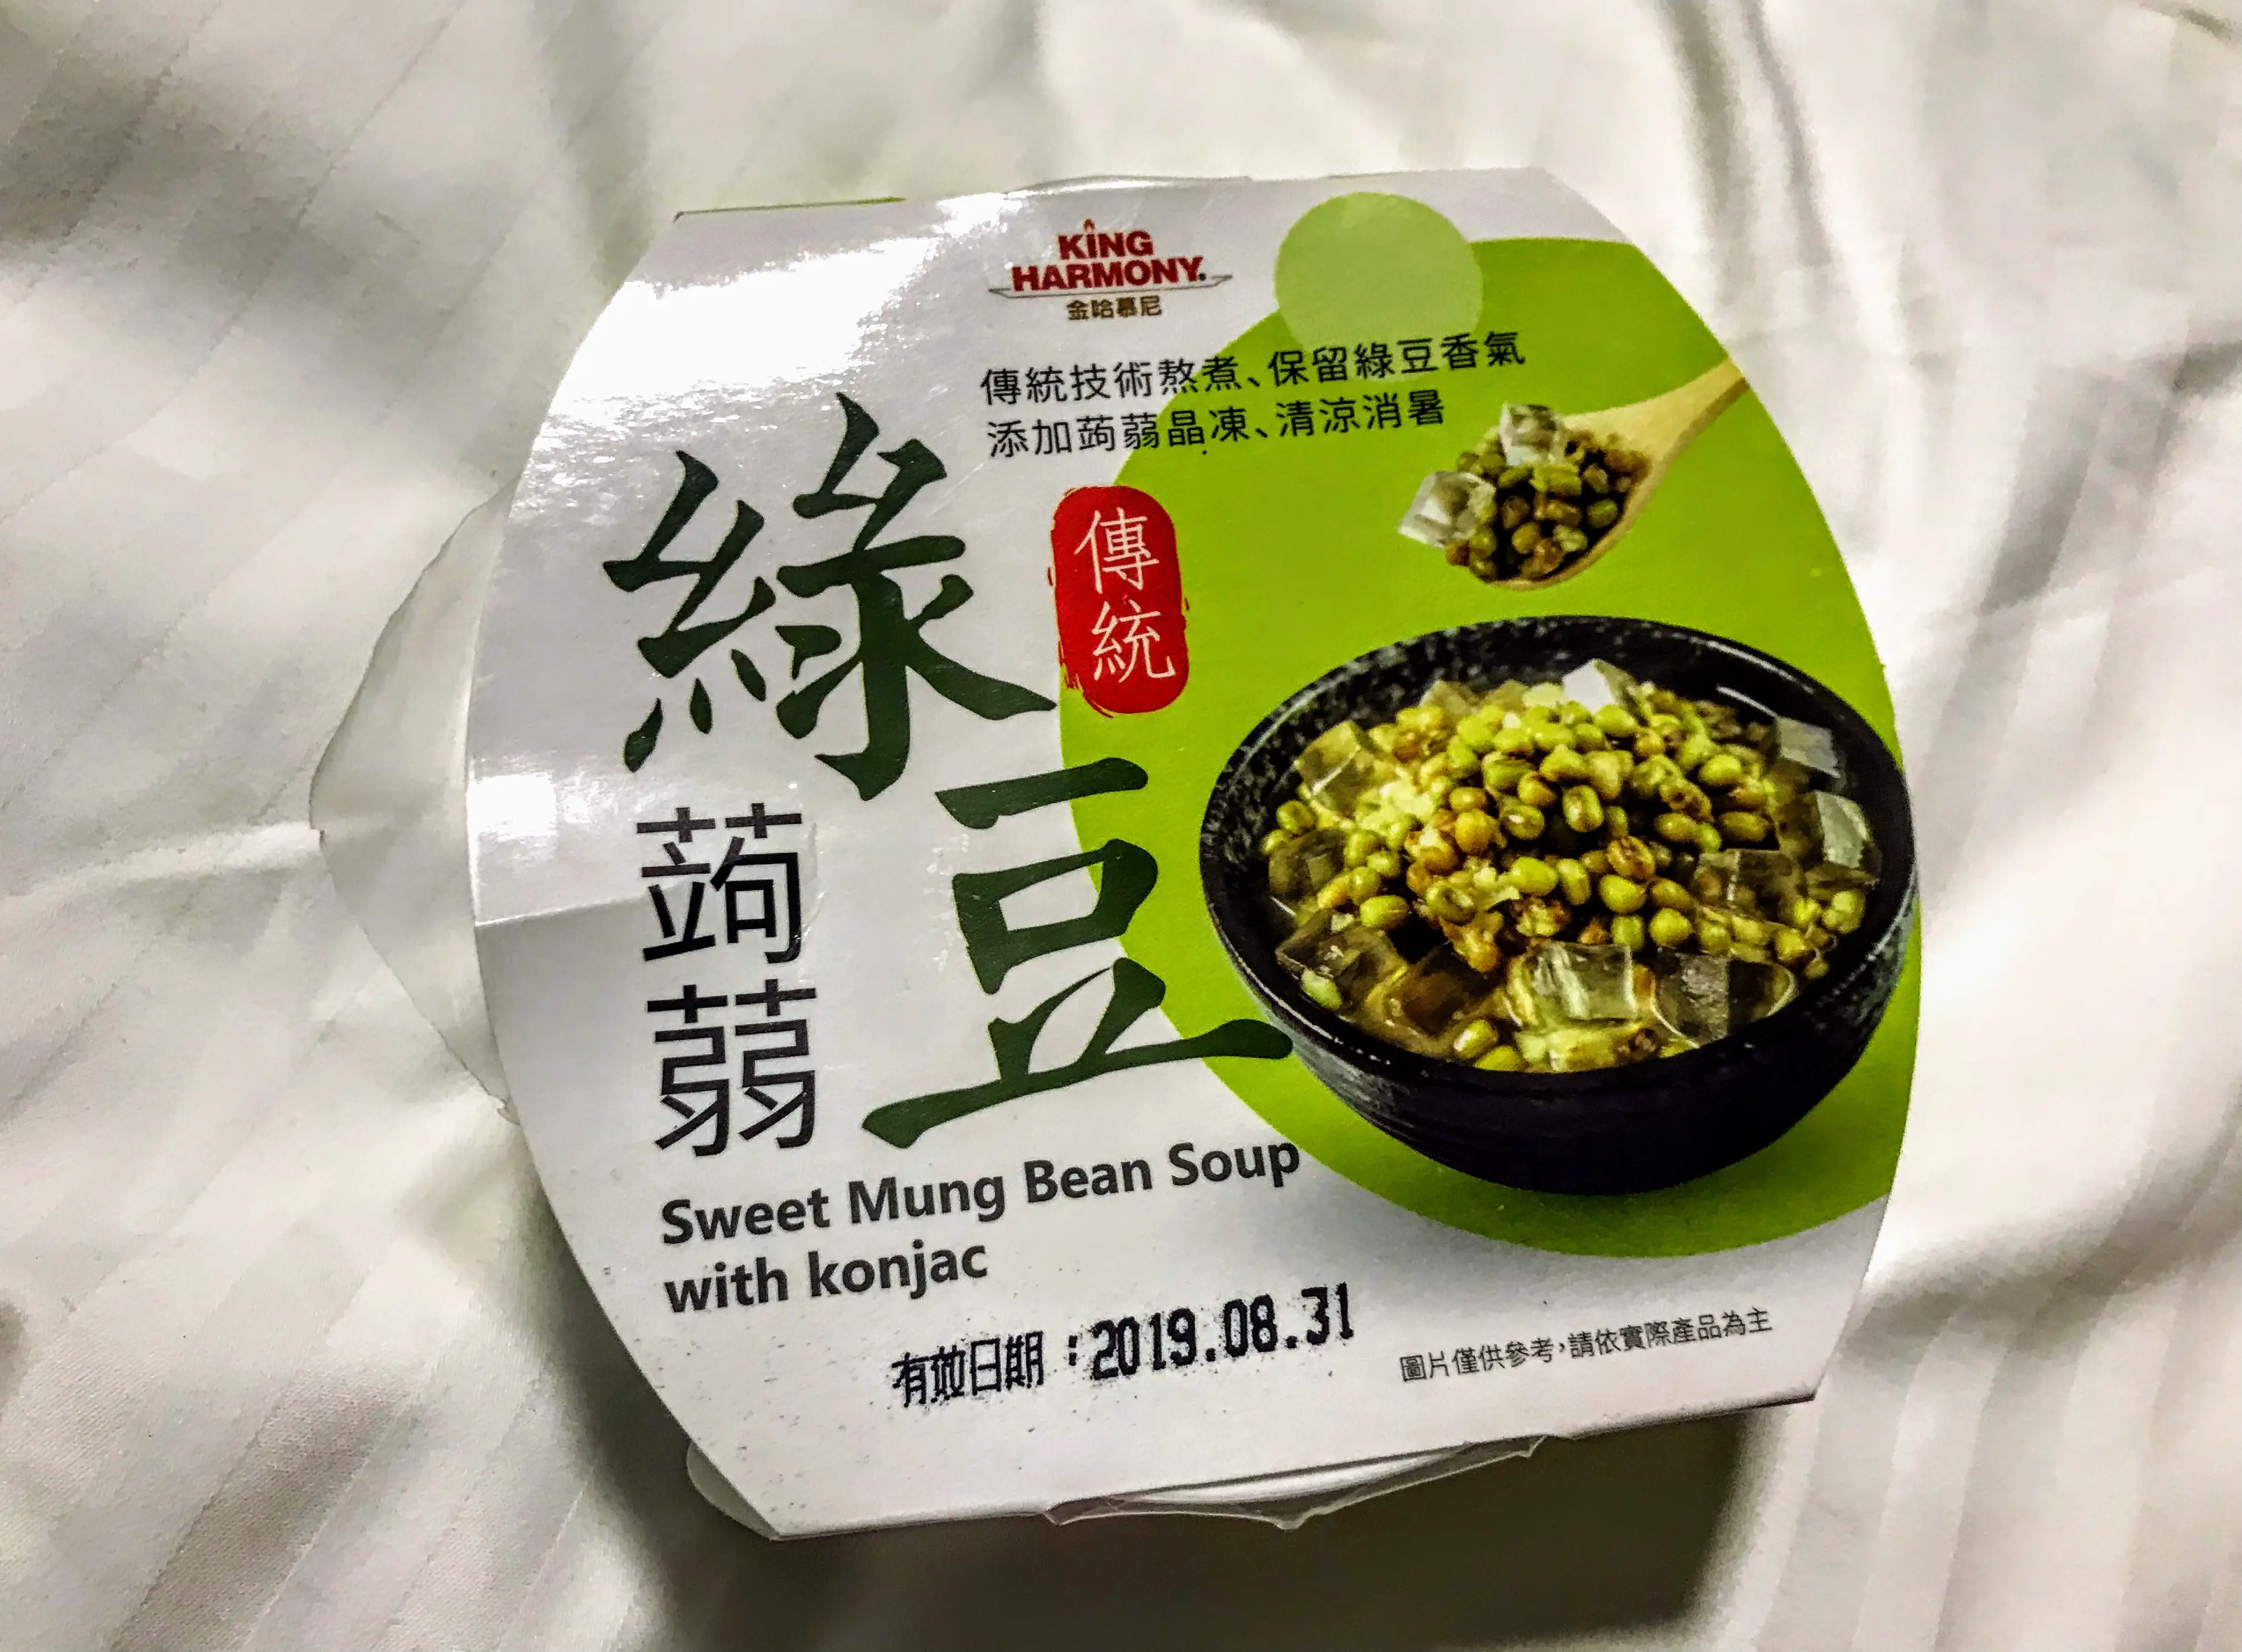 Sweet mung bean soup with konjac, Taiwan